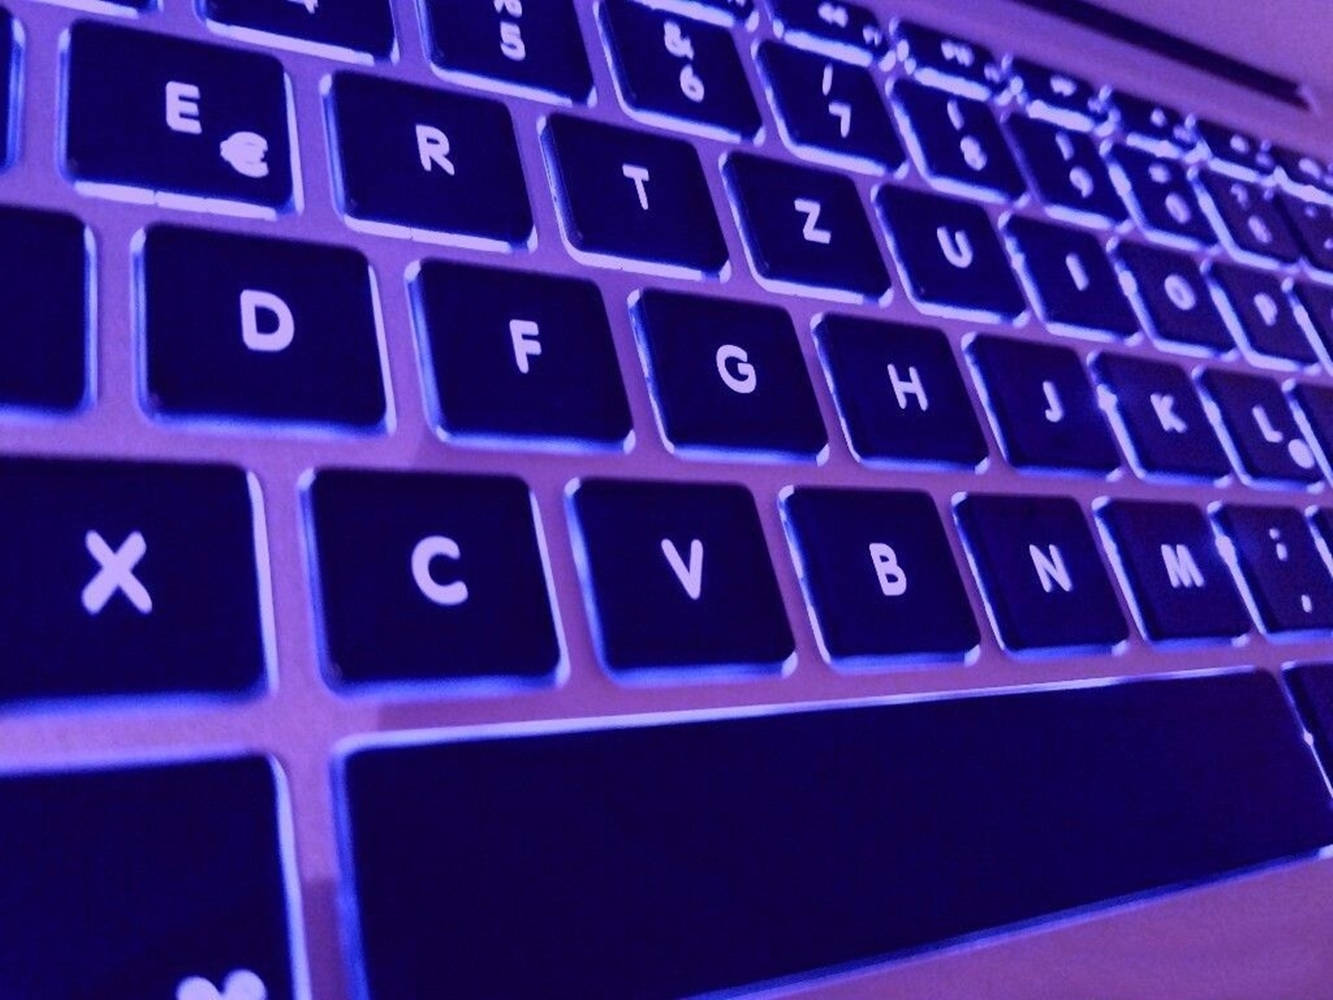 Macbook Backlight Keyboard Aesthetic Wallpaper